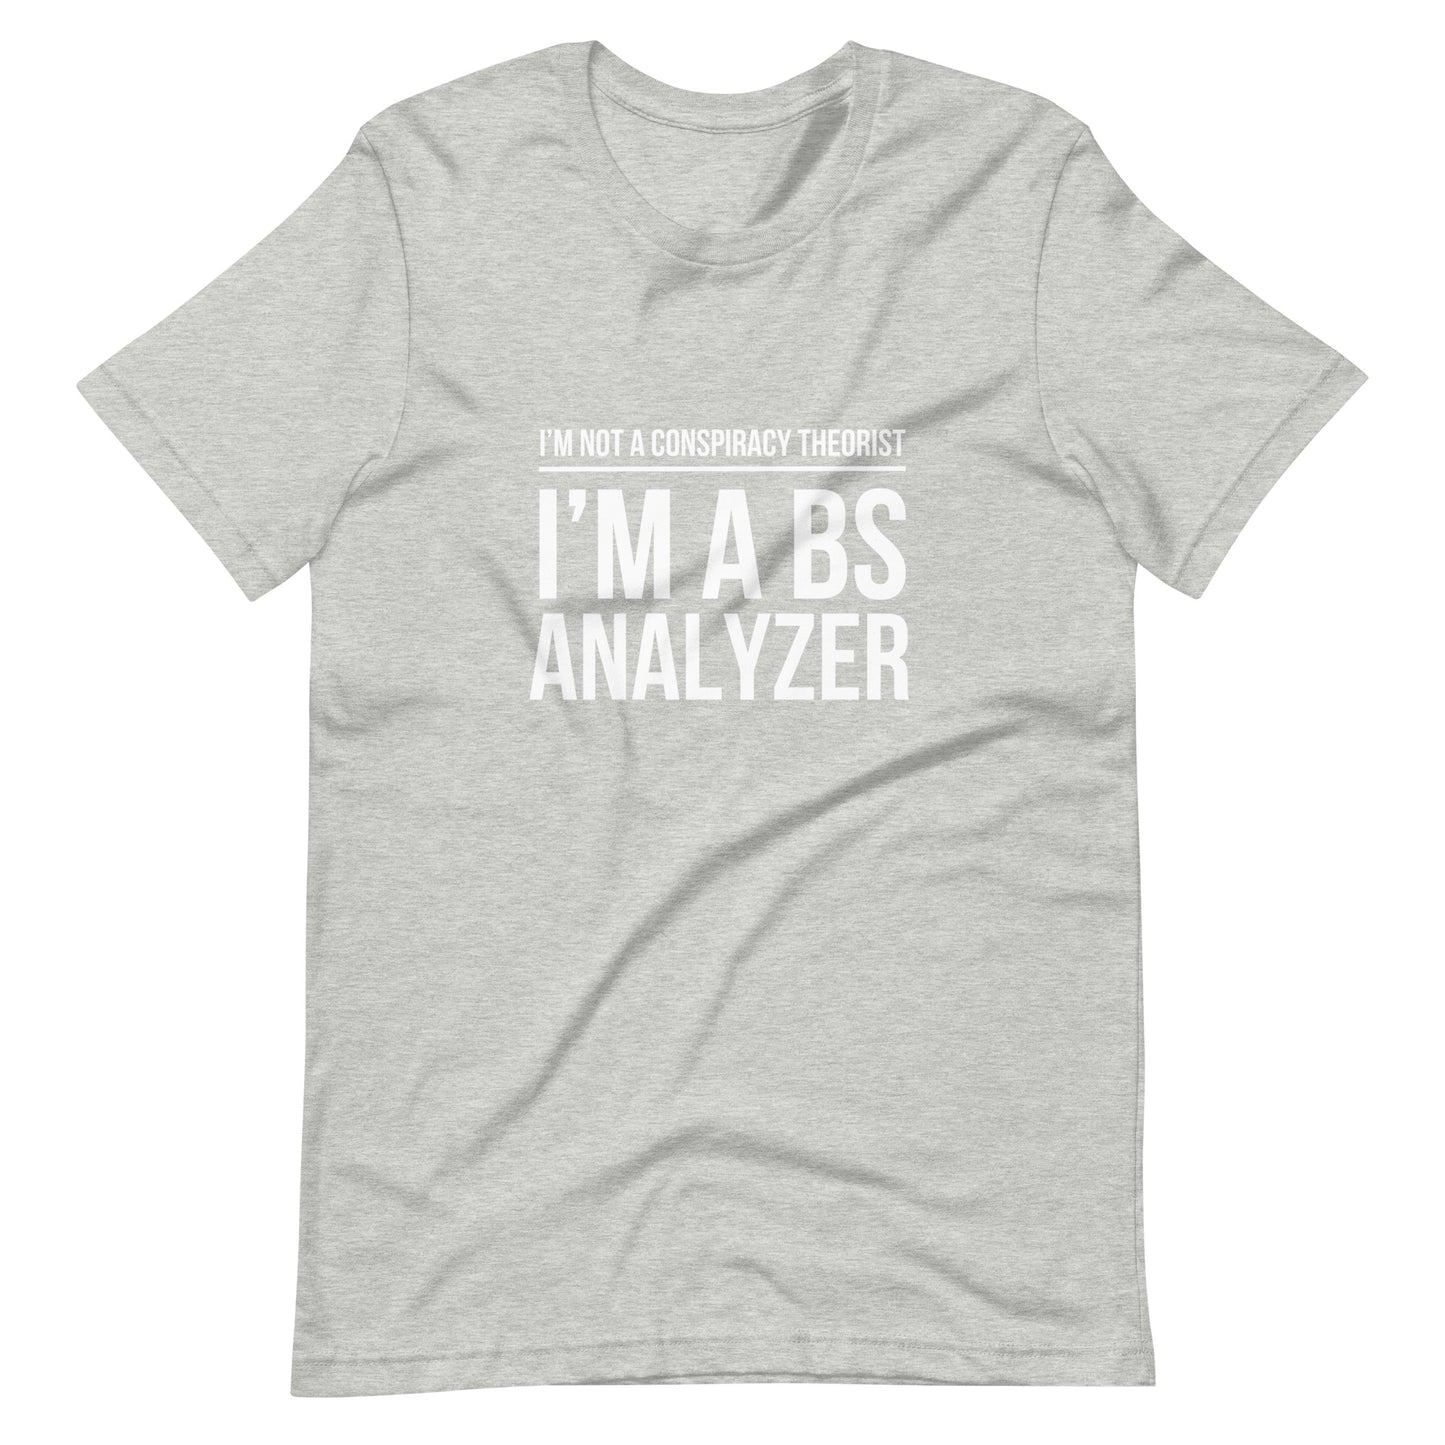 BS Analyzer Censored 2.0* Unisex t-shirt